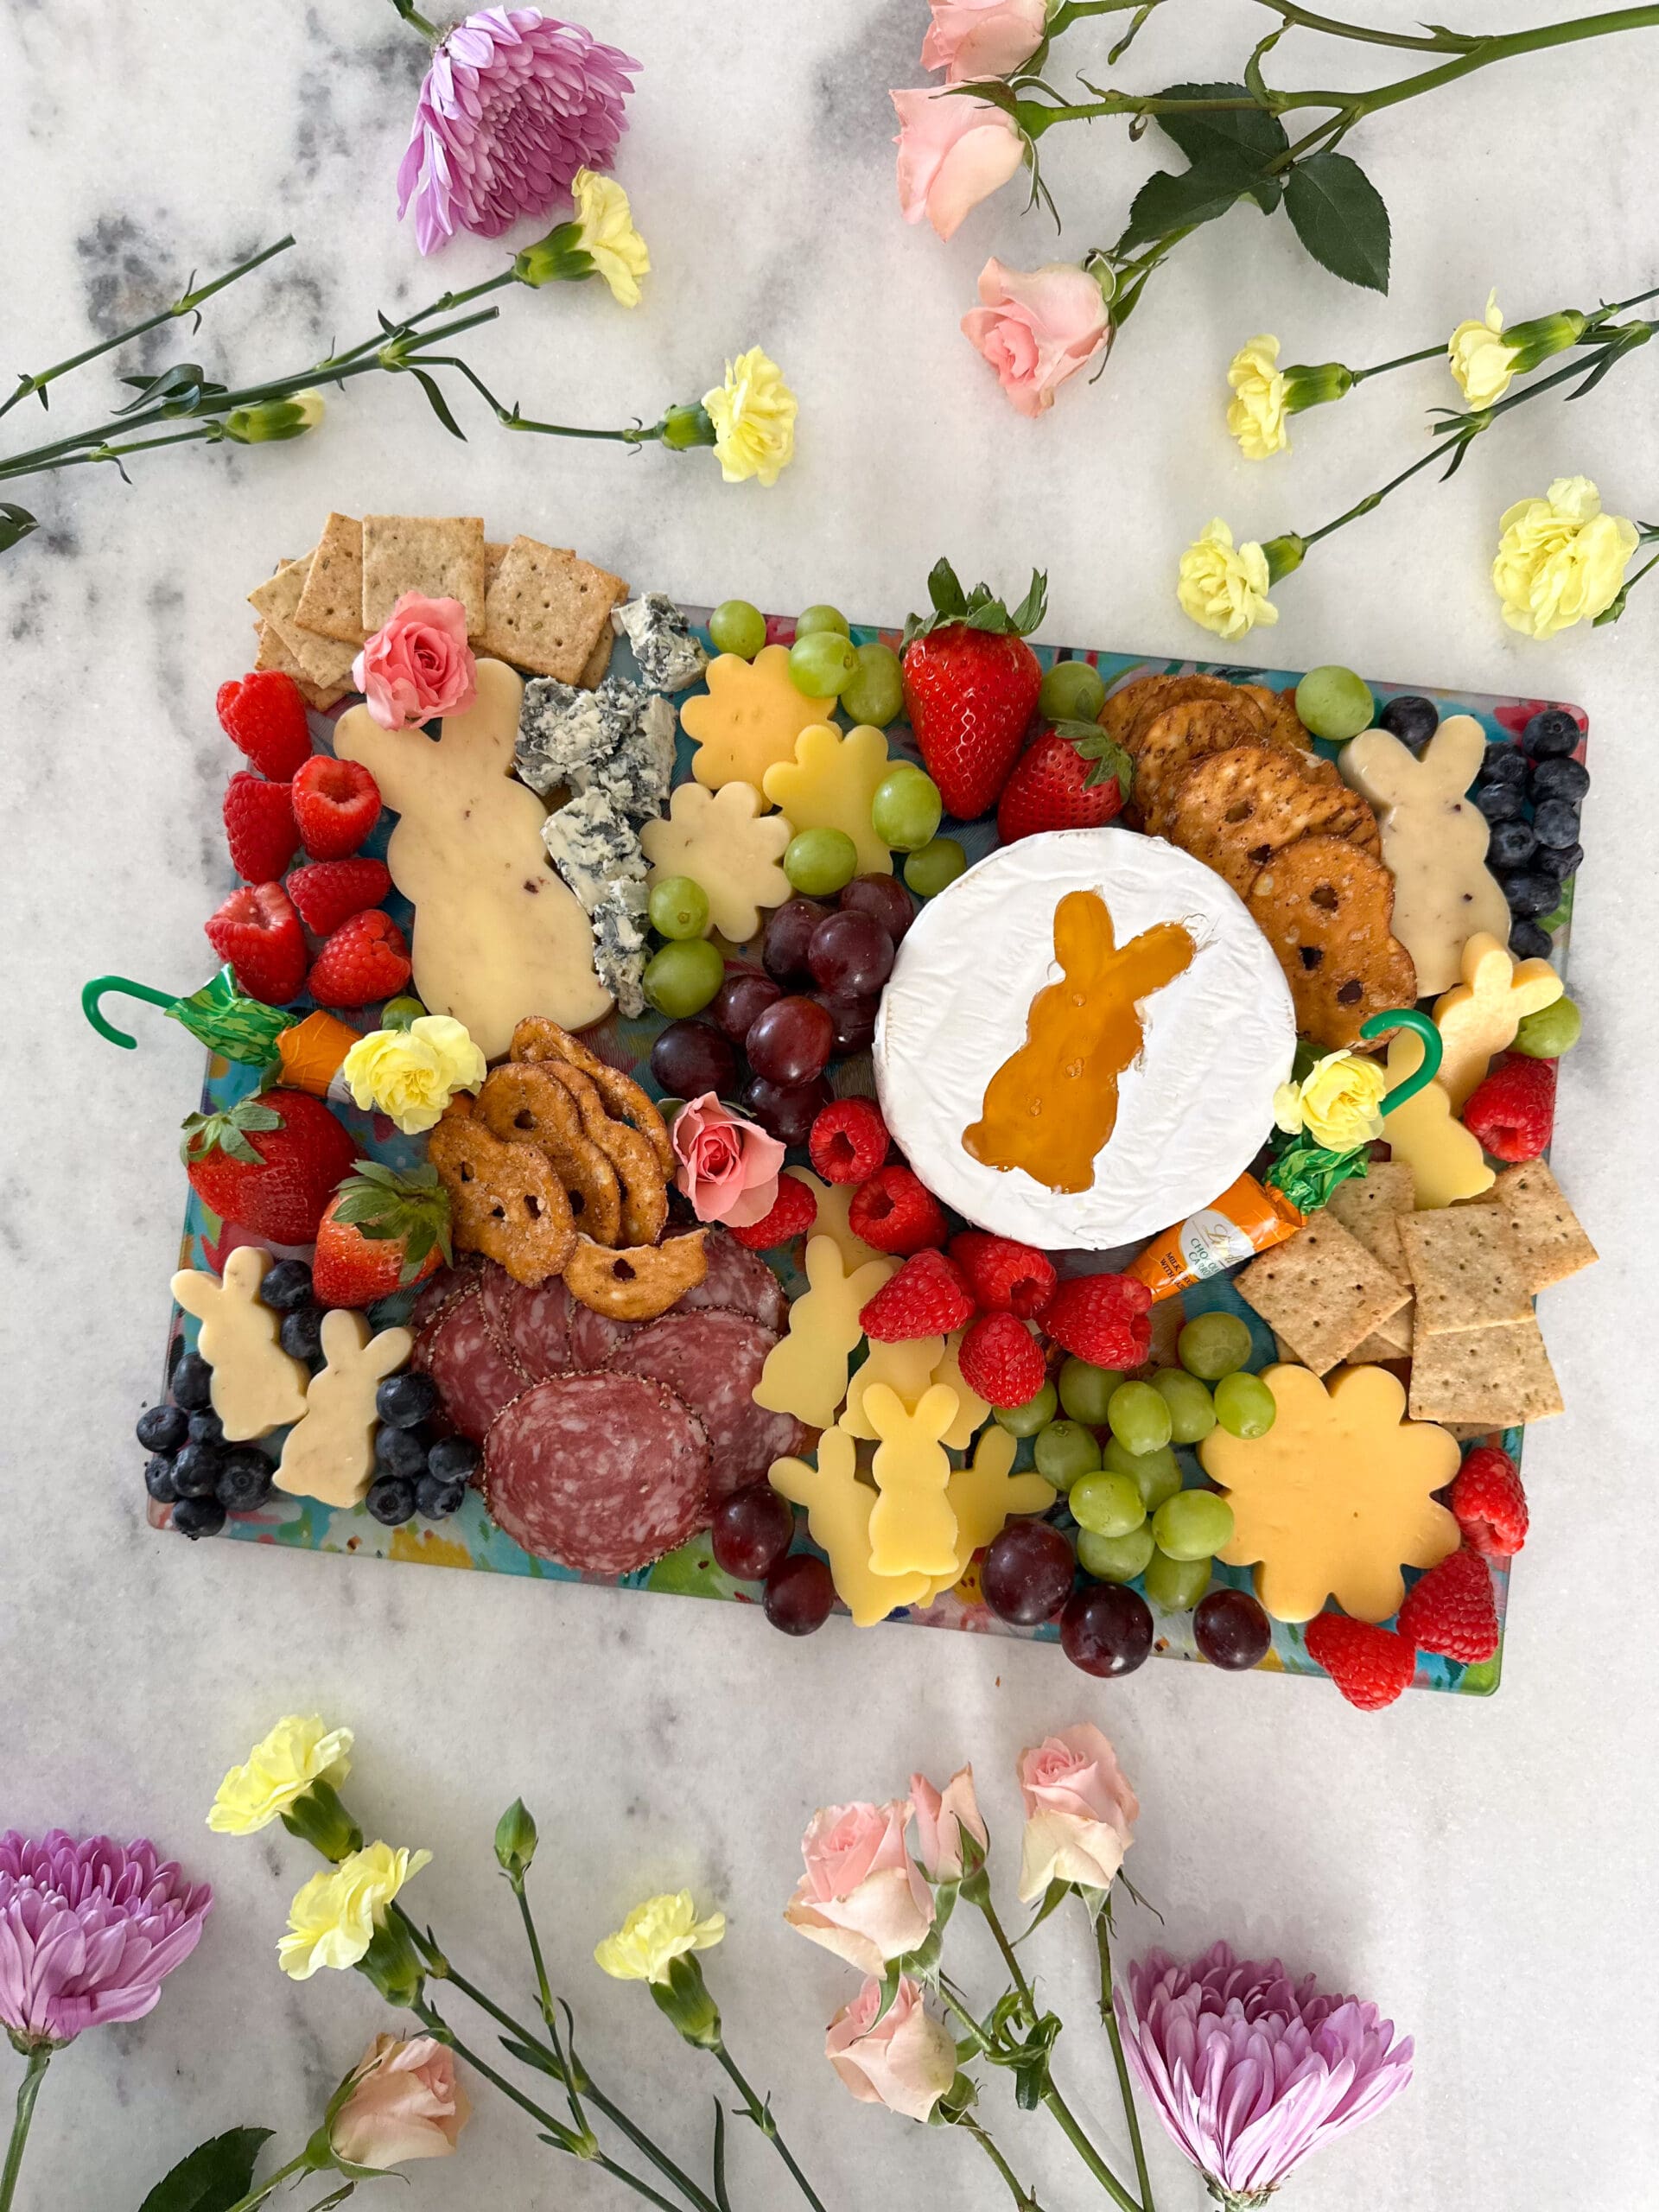 Easter Charcuterie Board Idea: Build & Serve This Adorable Springtime Snack Board